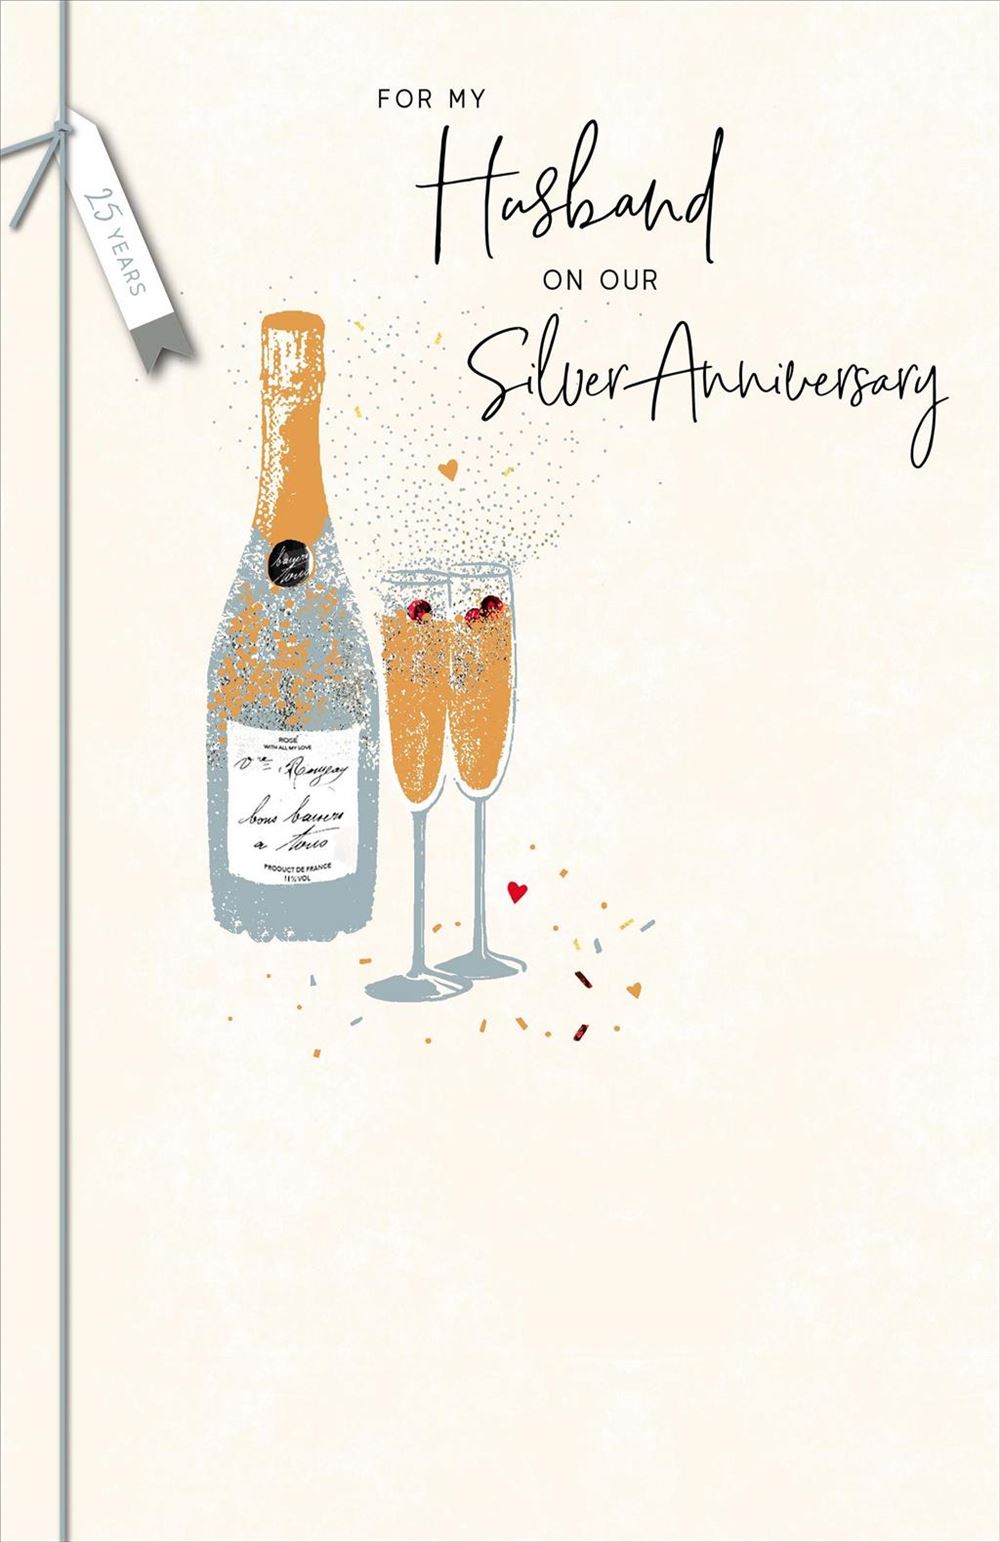 Husband's 25th Wedding Anniversary Card - Champagne Toast and Heartfelt Gratitude